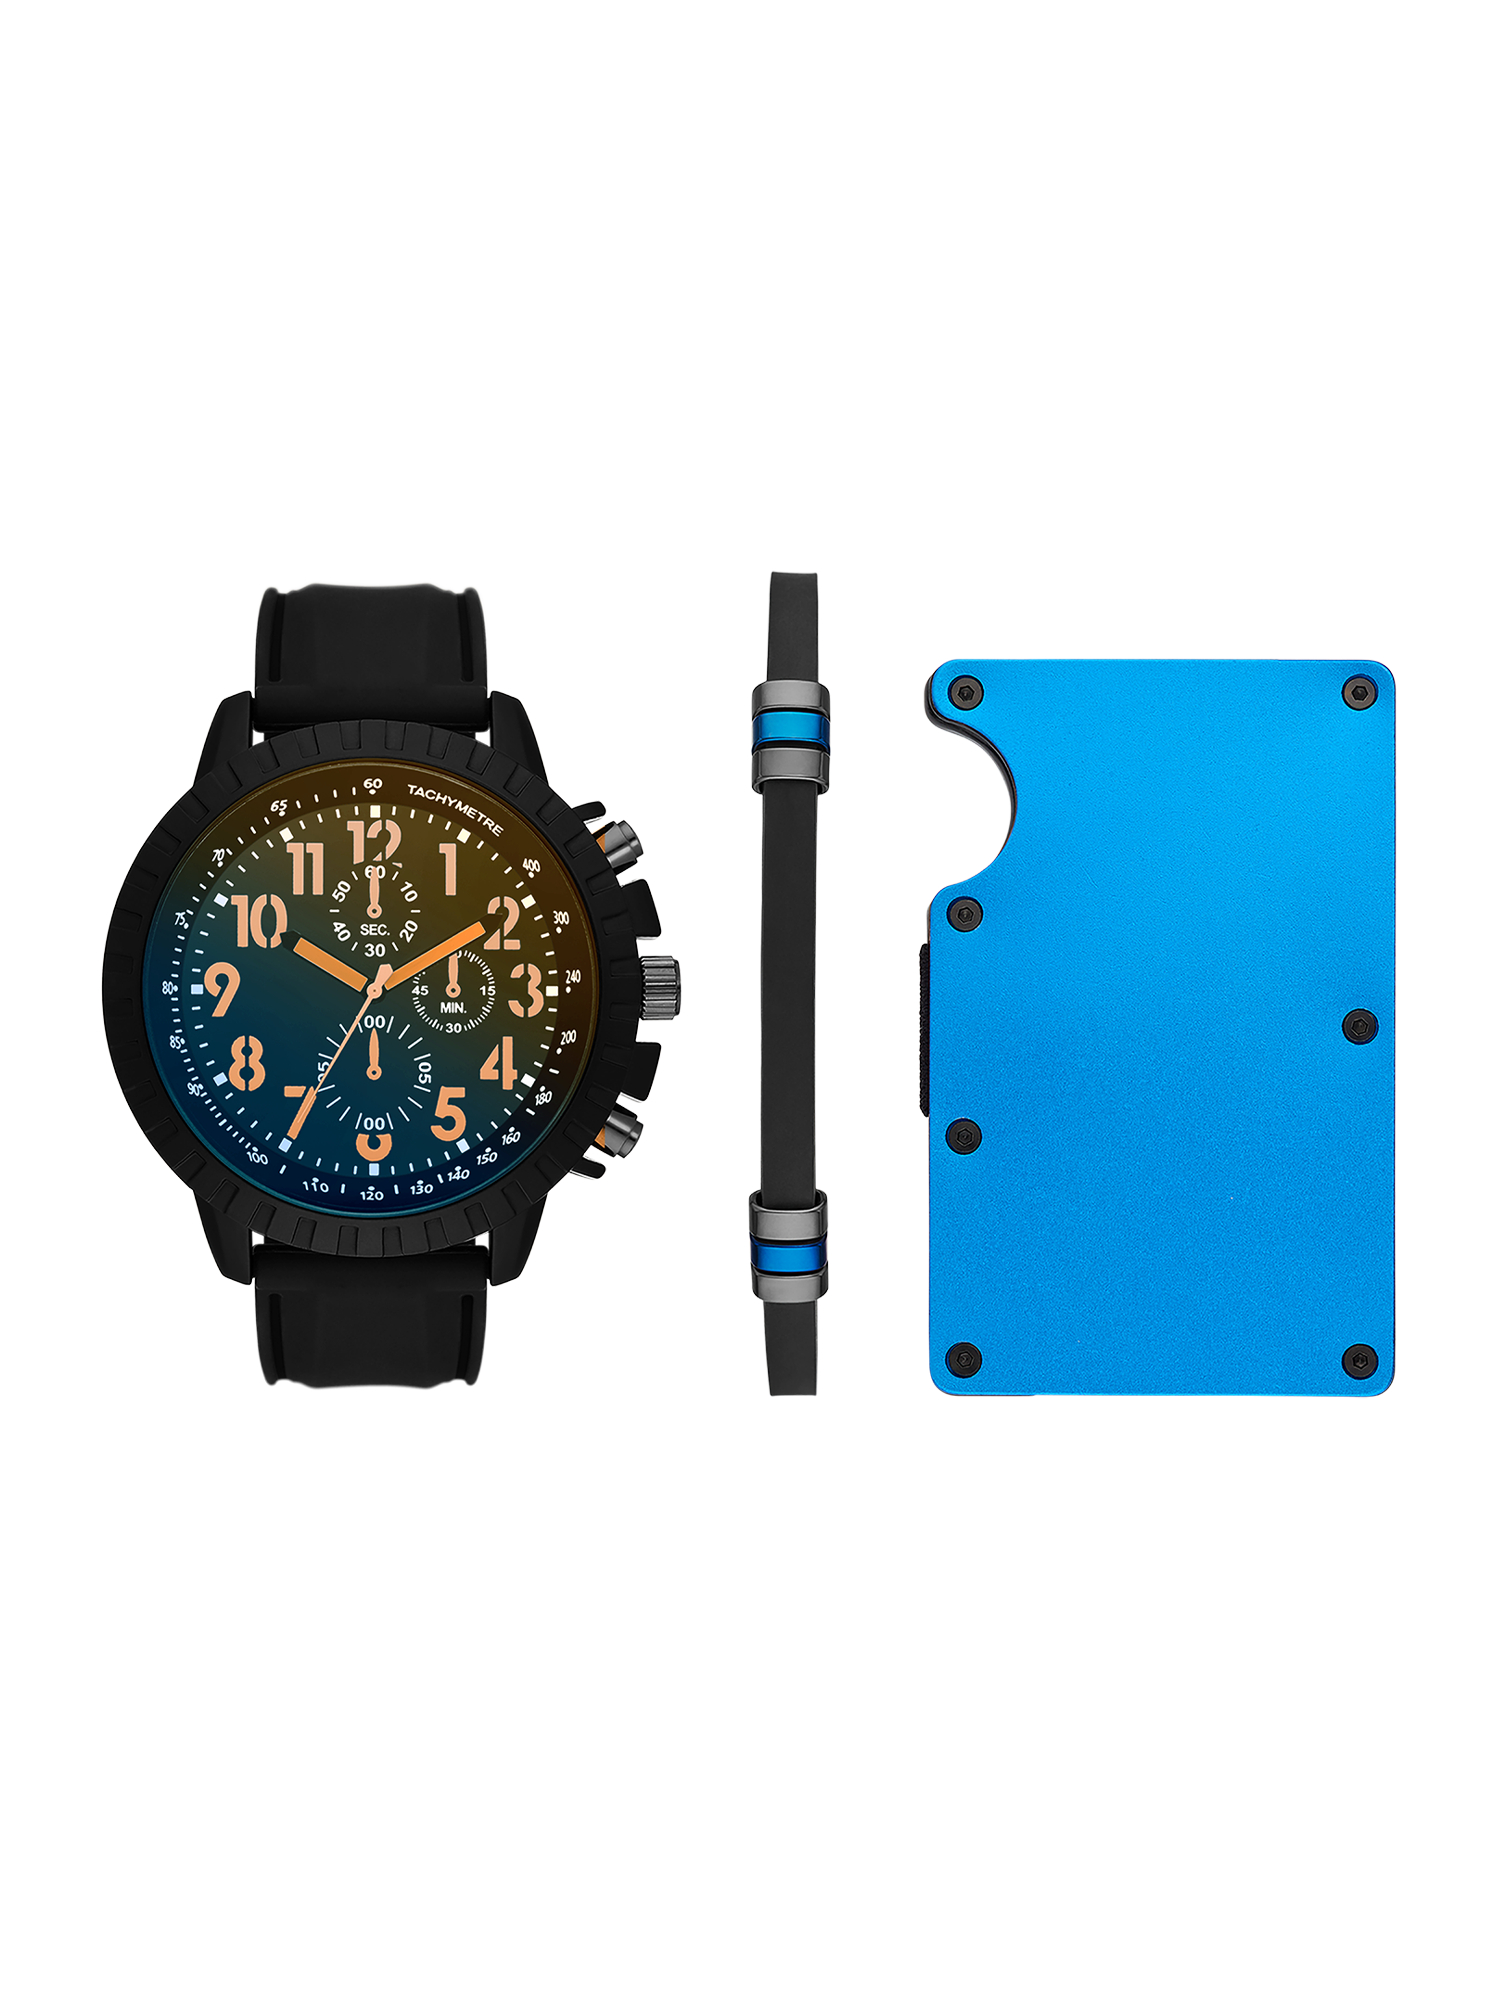 Folio Men's Black Round Analog Watch with Black Silicone Strap, Fashion Bracelet and Blue Metal Card Case Gift Set (FMDAL1141) - image 1 of 3